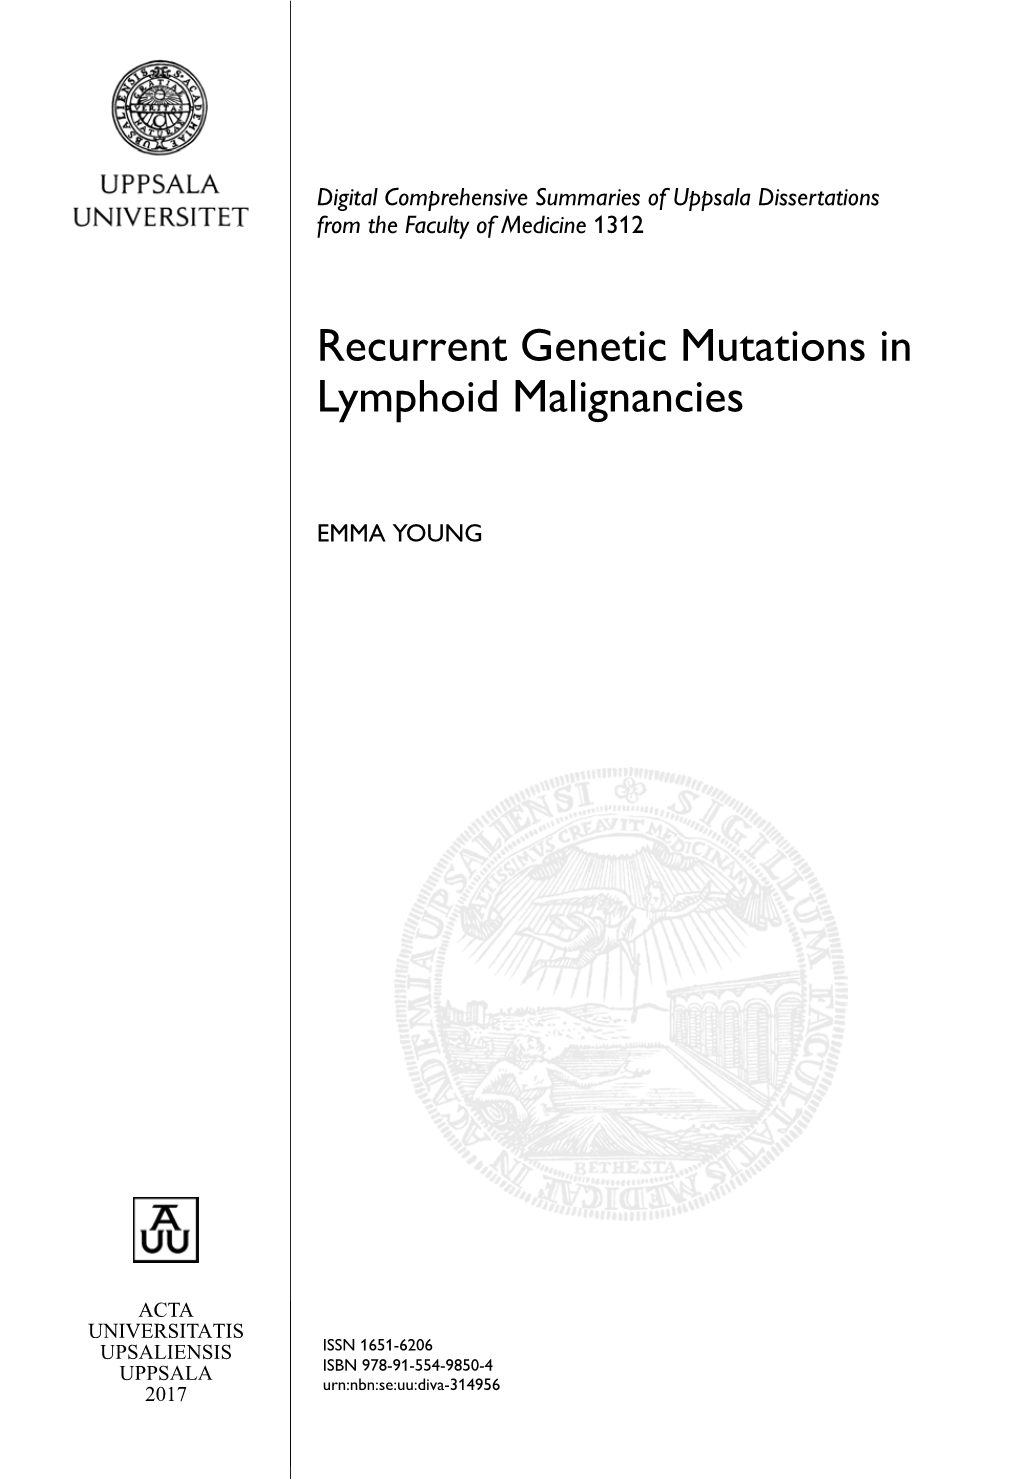 Recurrent Genetic Mutations in Lymphoid Malignancies